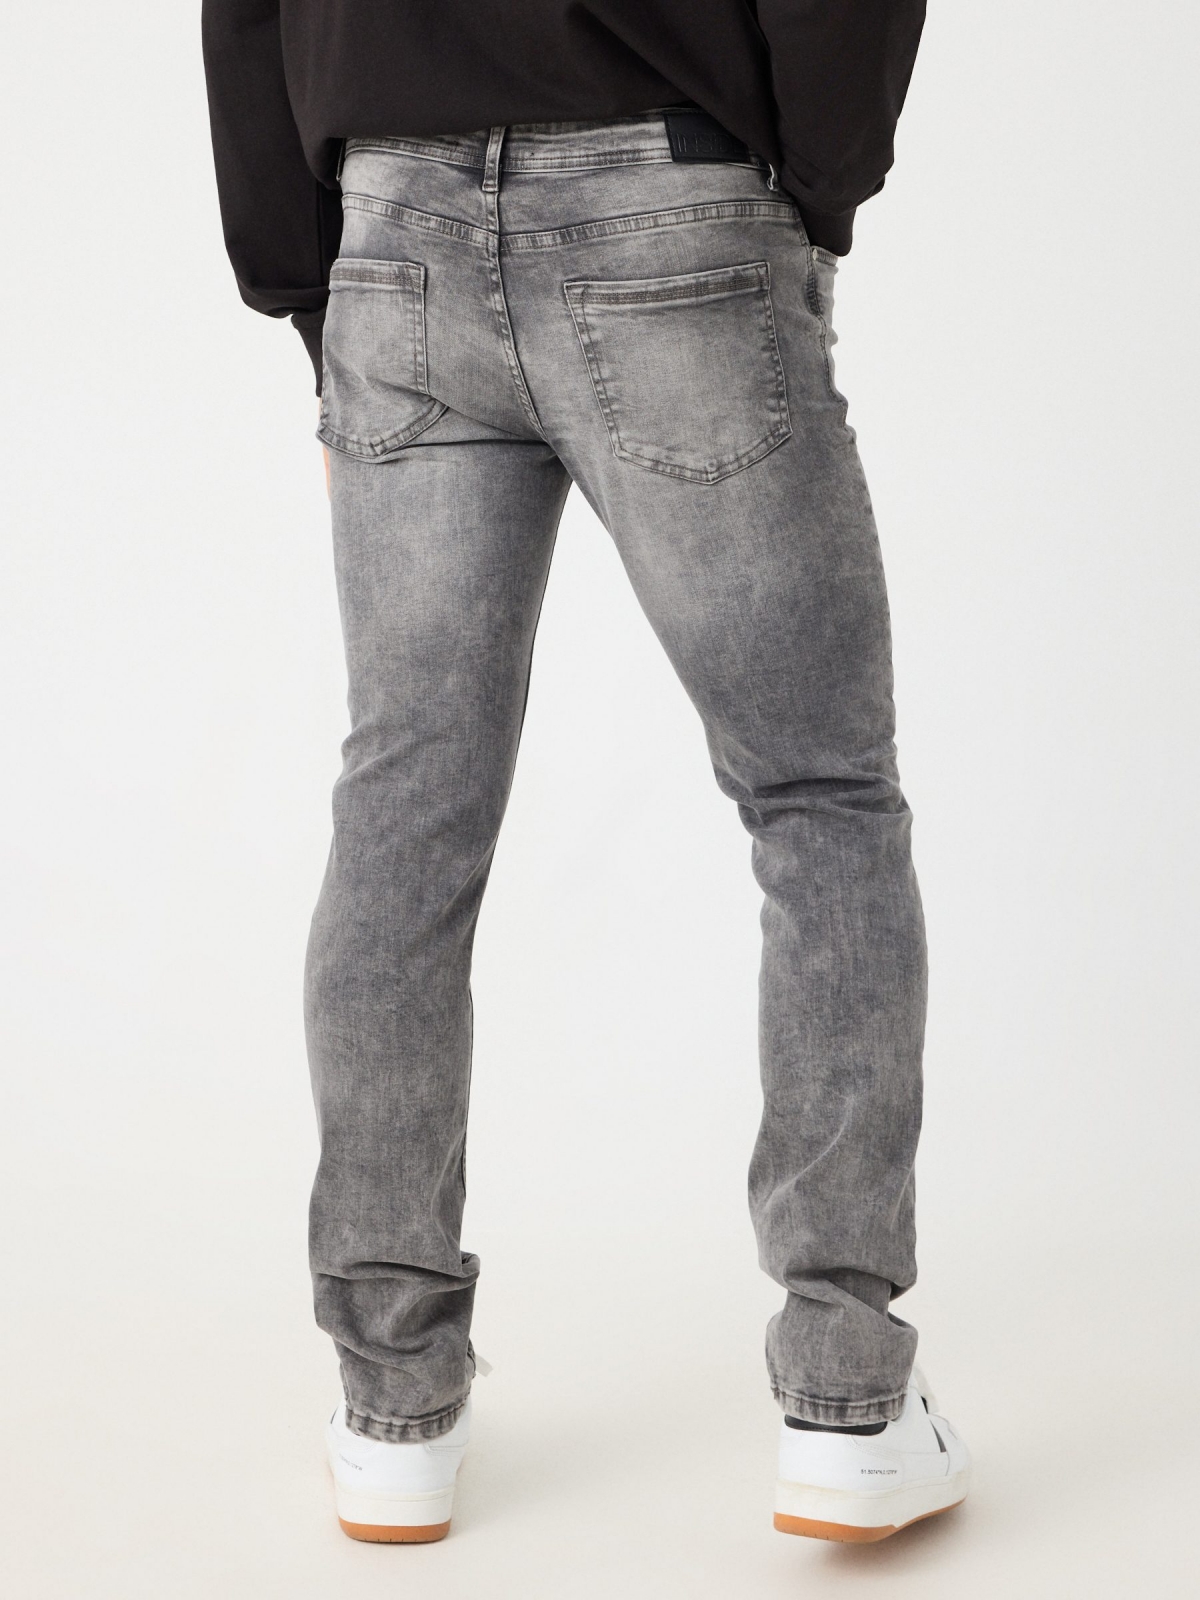 Jeans basico gris vista media trasera